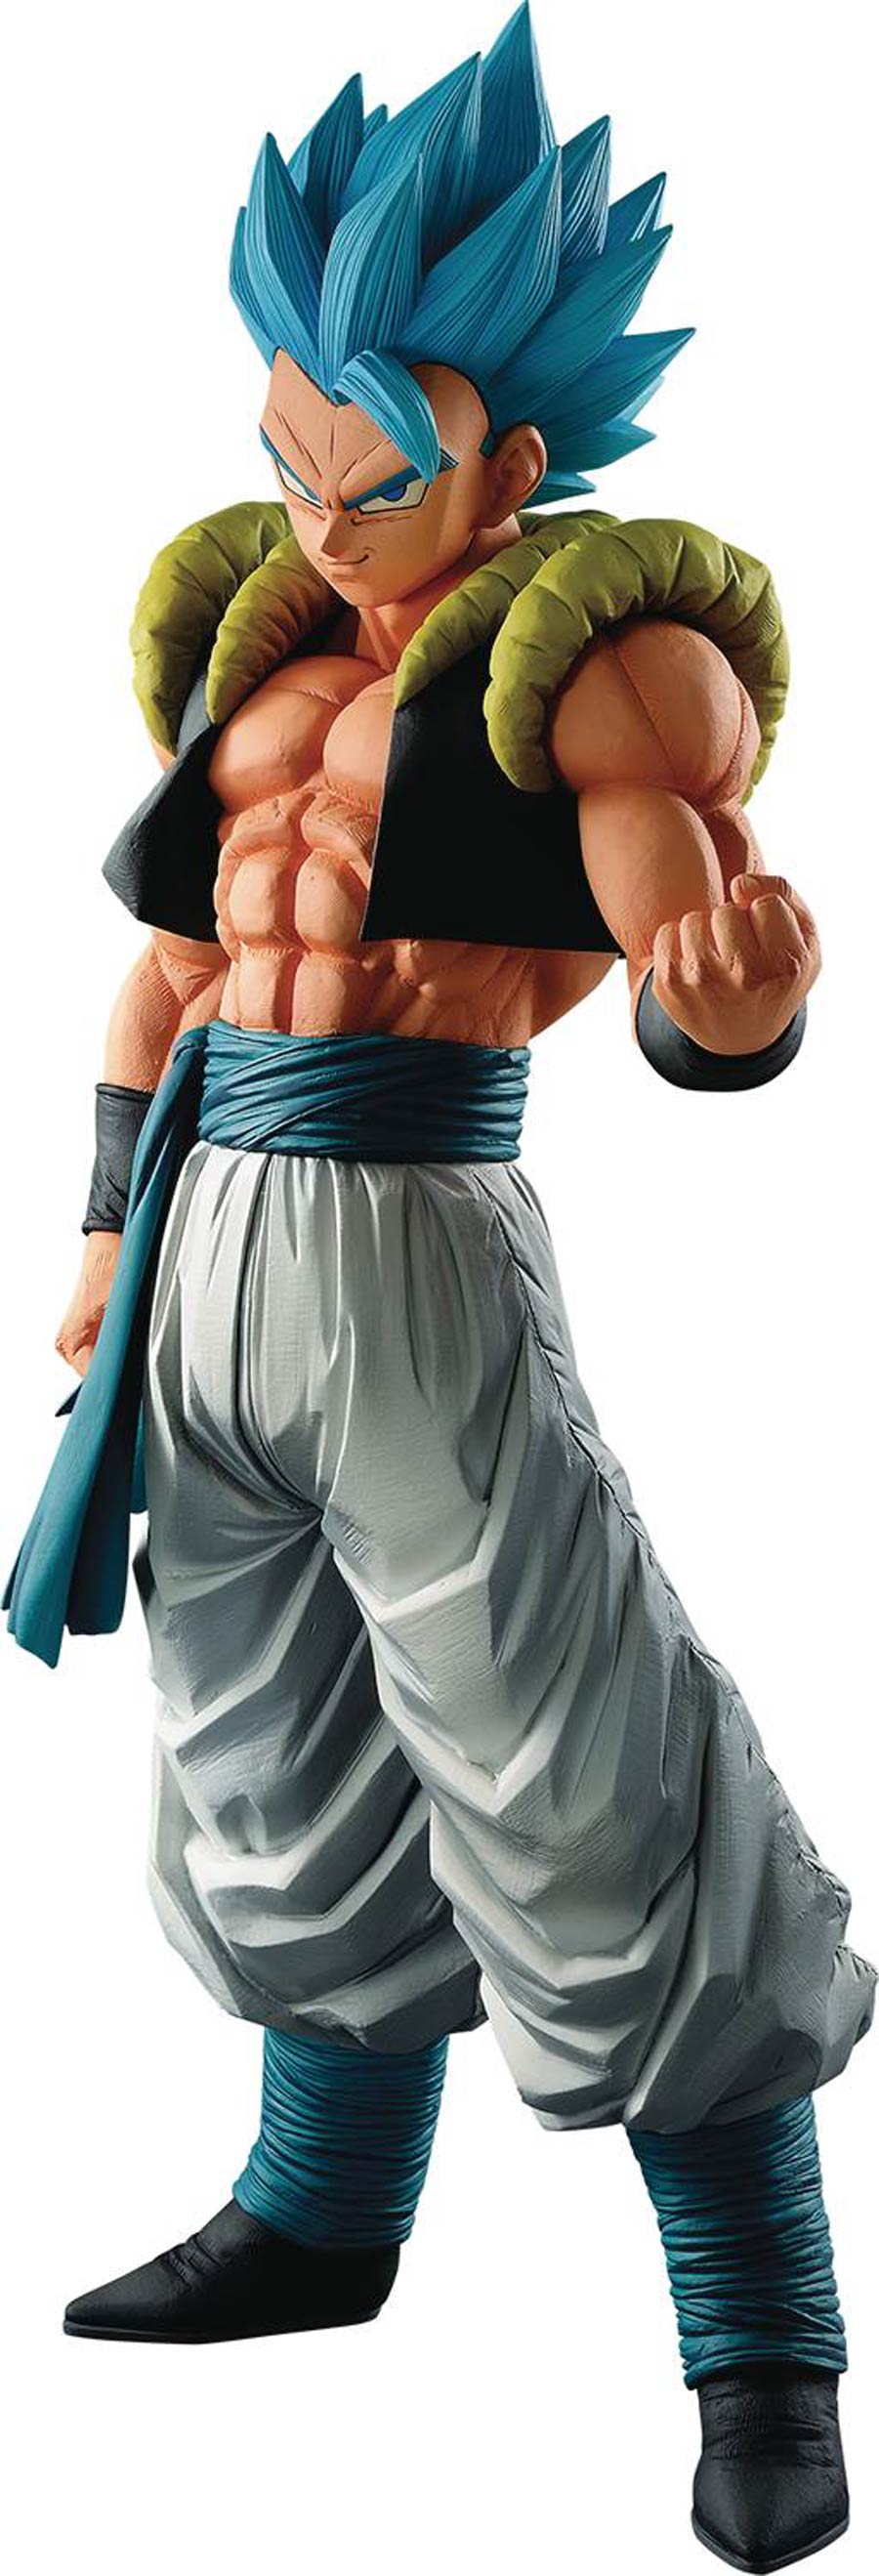 Dragon Ball Super Ichiban - Super Saiyan God Super Saiyan Gogeta (Extreme Saiyan) Figure